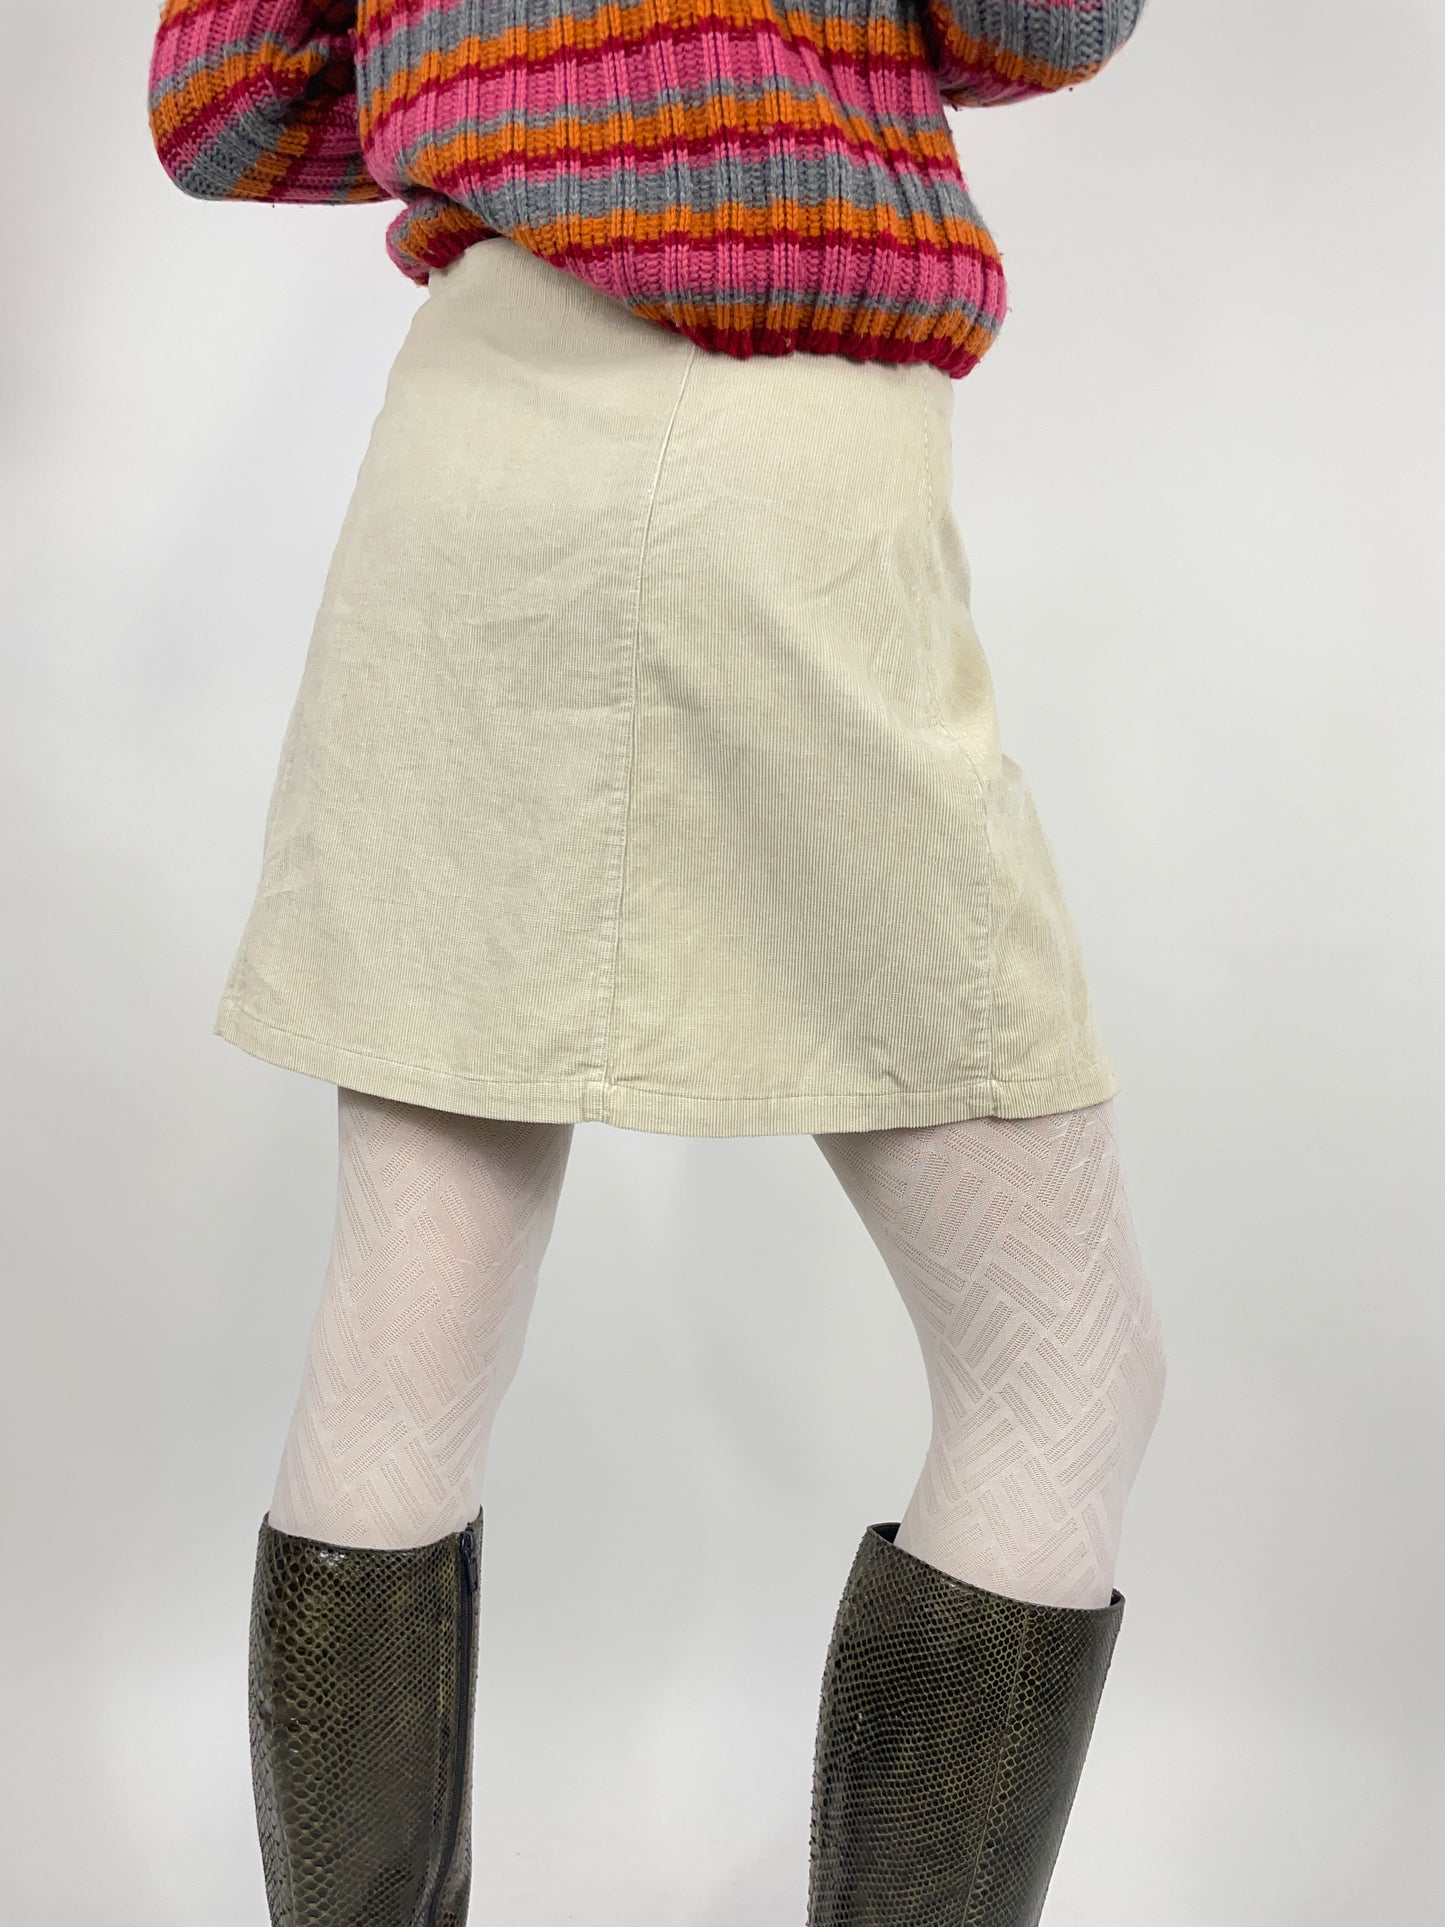 Striped miniskirt